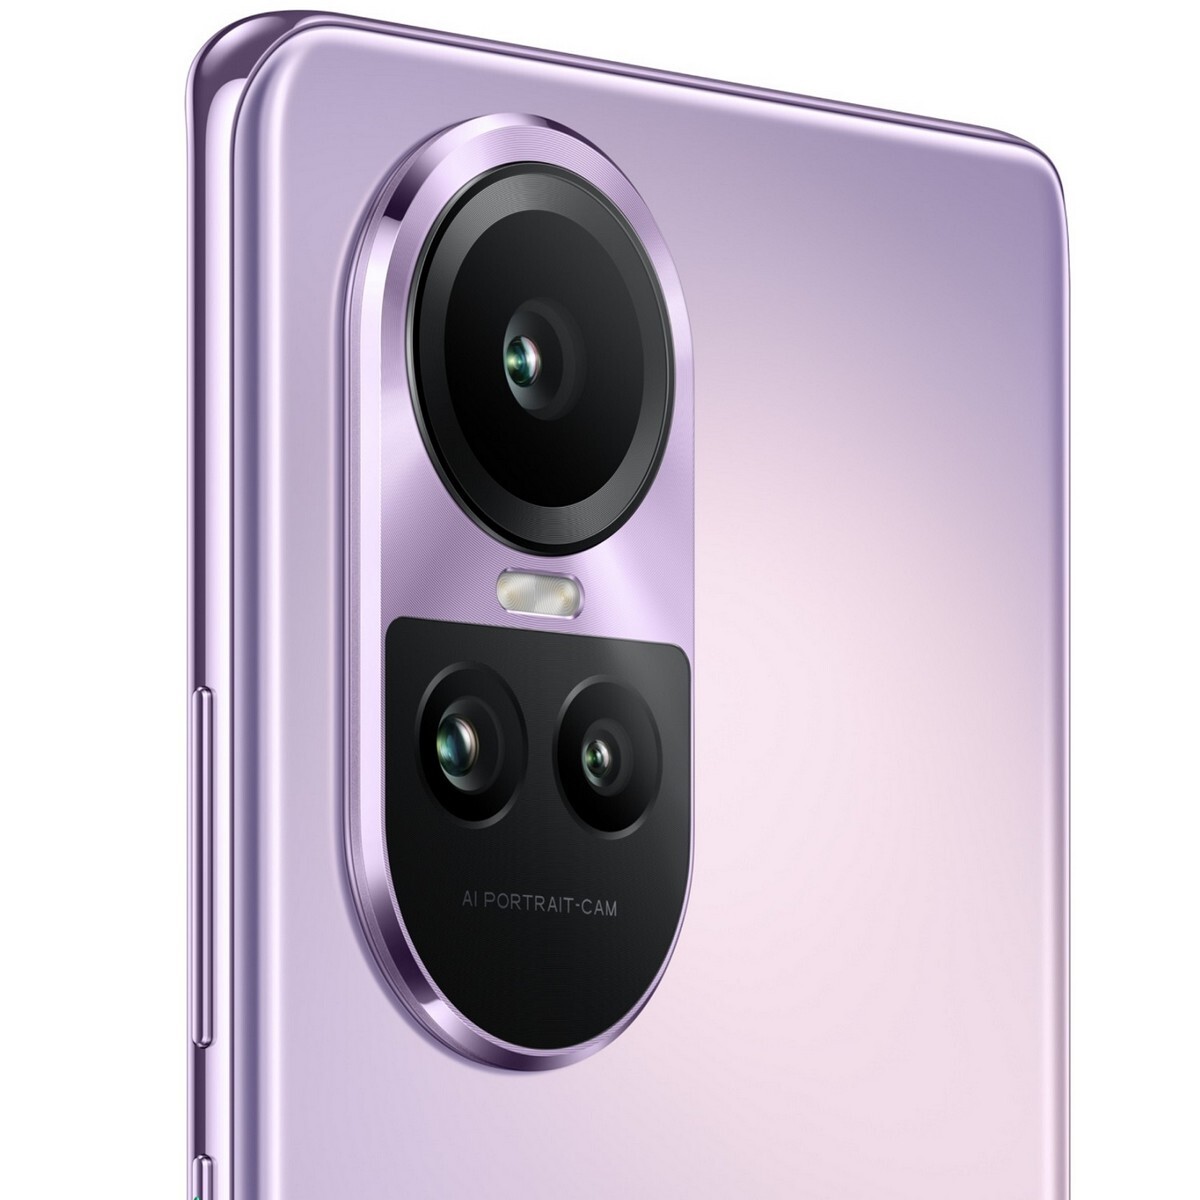 Oppo Reno 10 Pro 12GB 256GB Glossy Purple